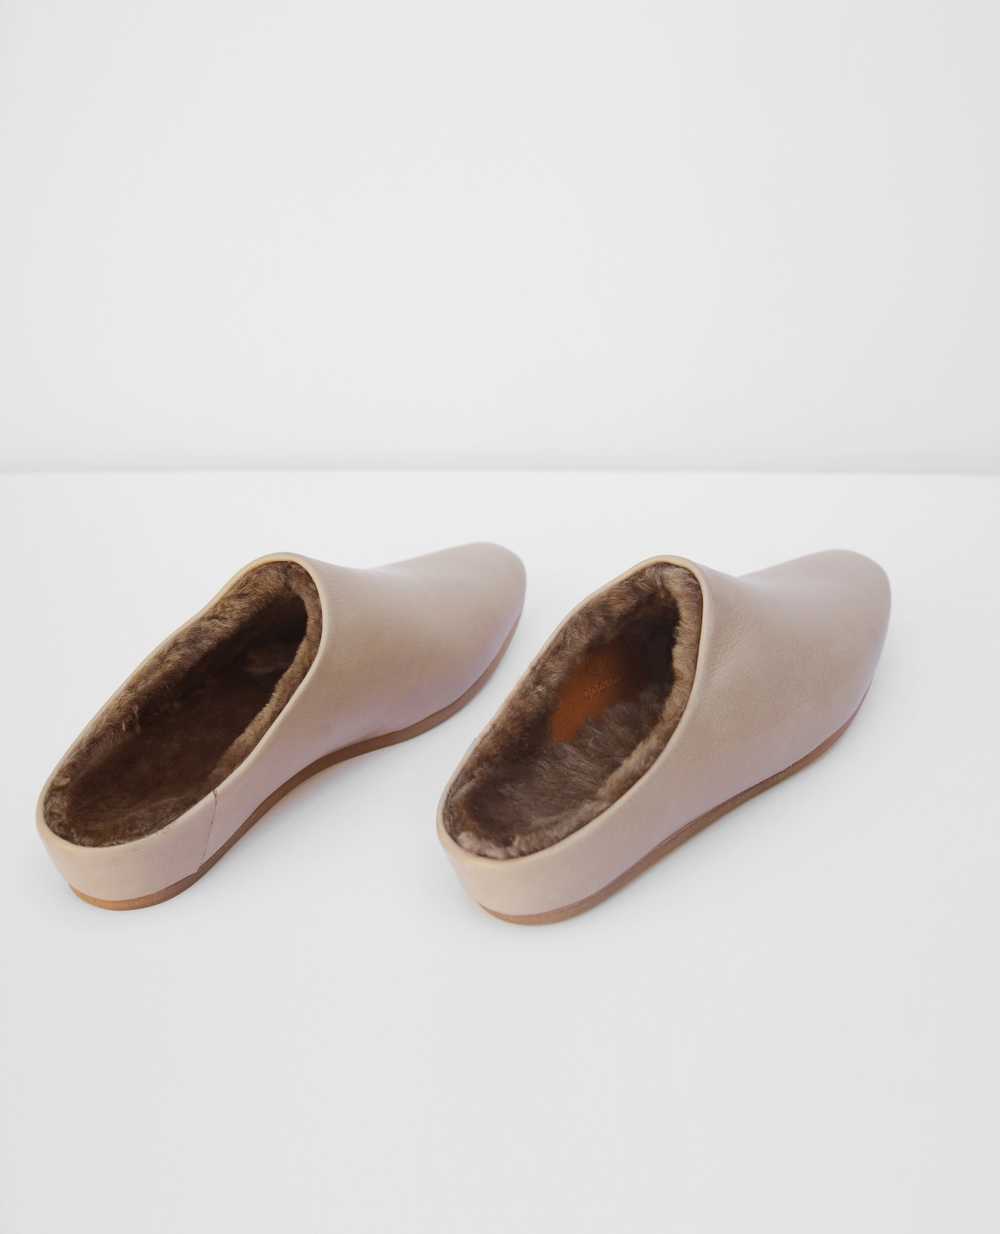 Coclico Gina Shearling Slide - Marmo Leather - image 2